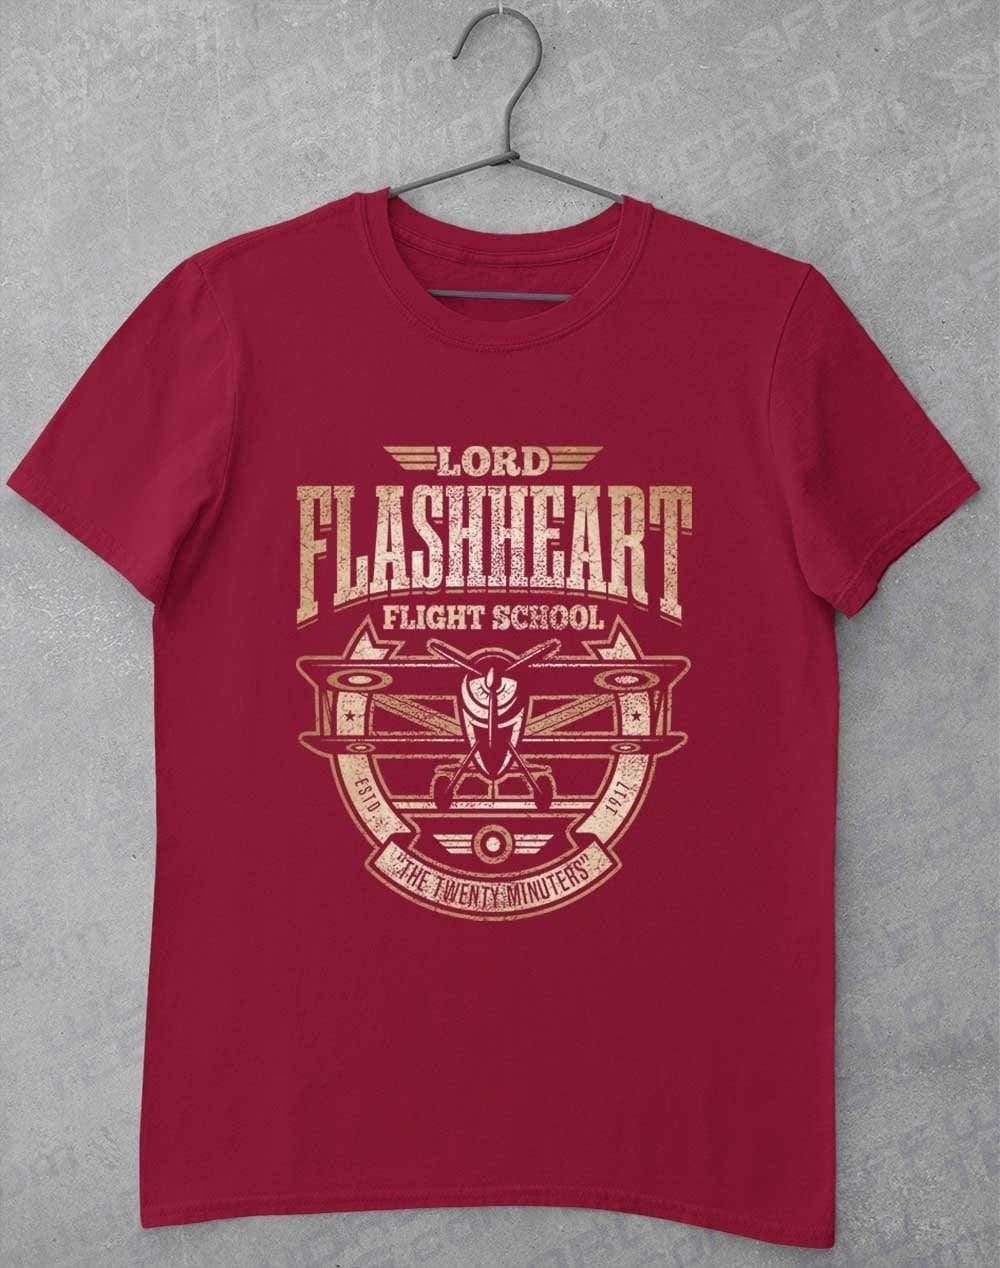 Flashheart's Flight School T-Shirt S / Cardinal Red  - Off World Tees